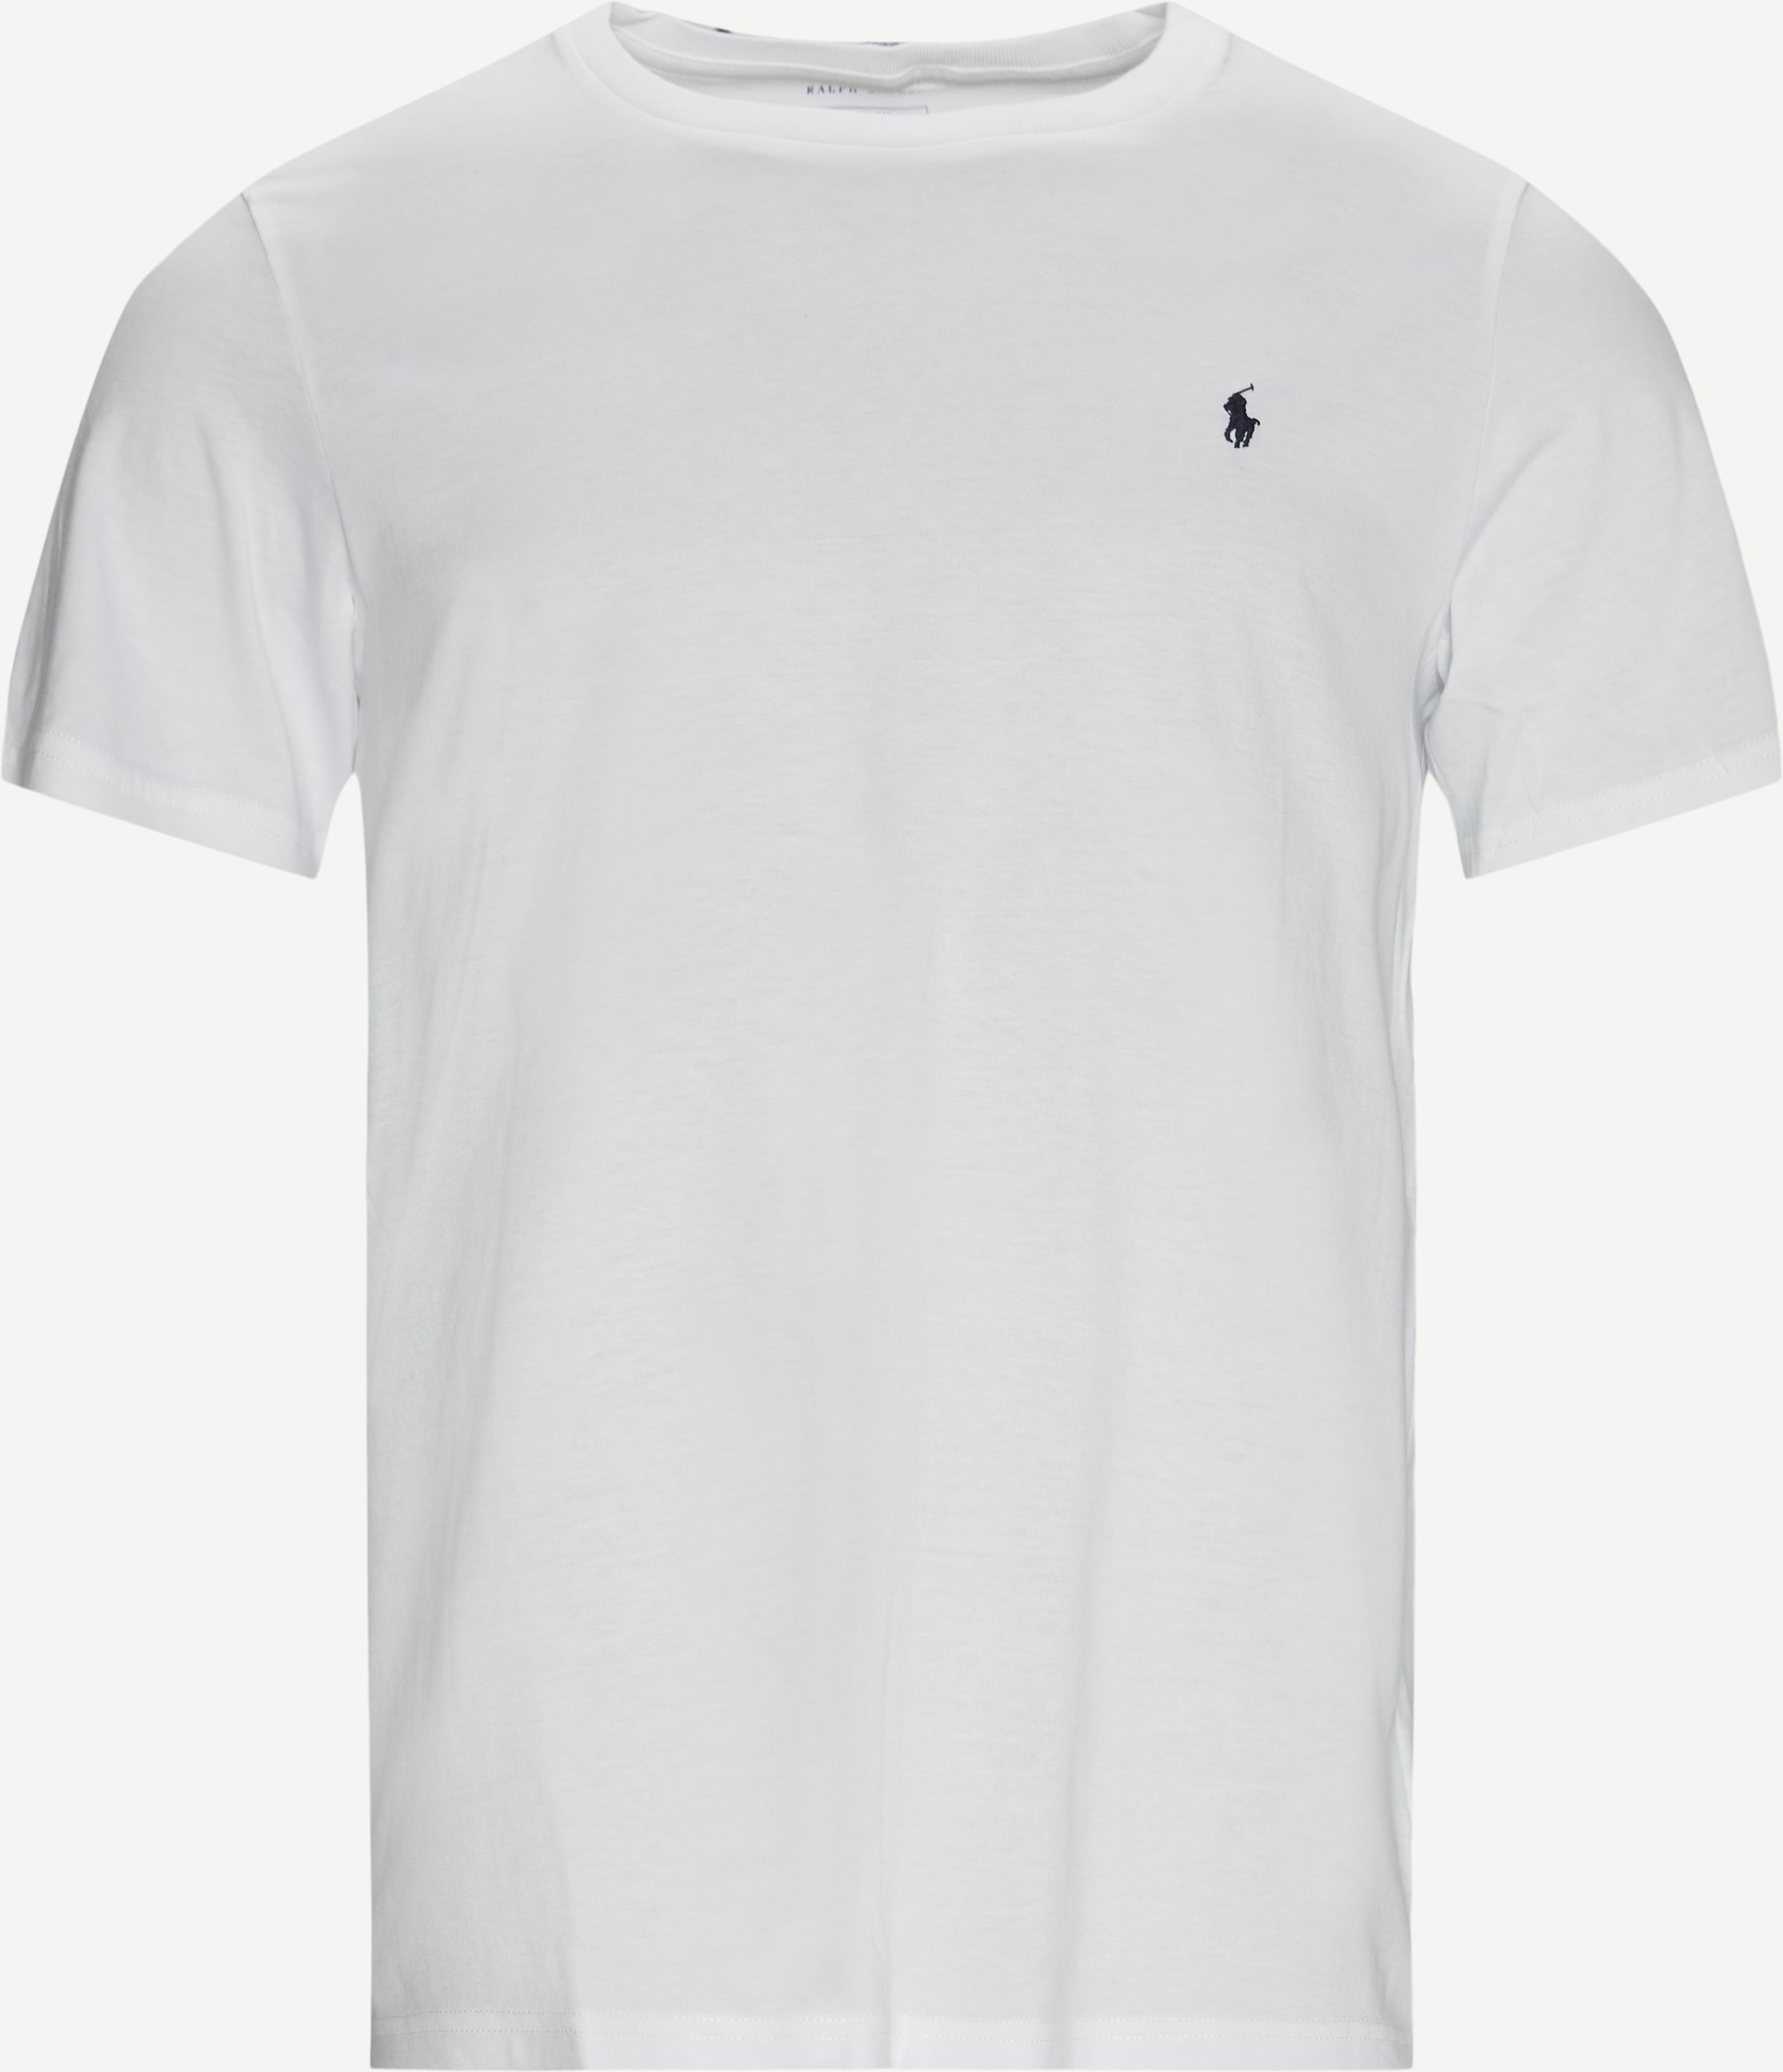 Polo Ralph Lauren T-shirts 714844756. White